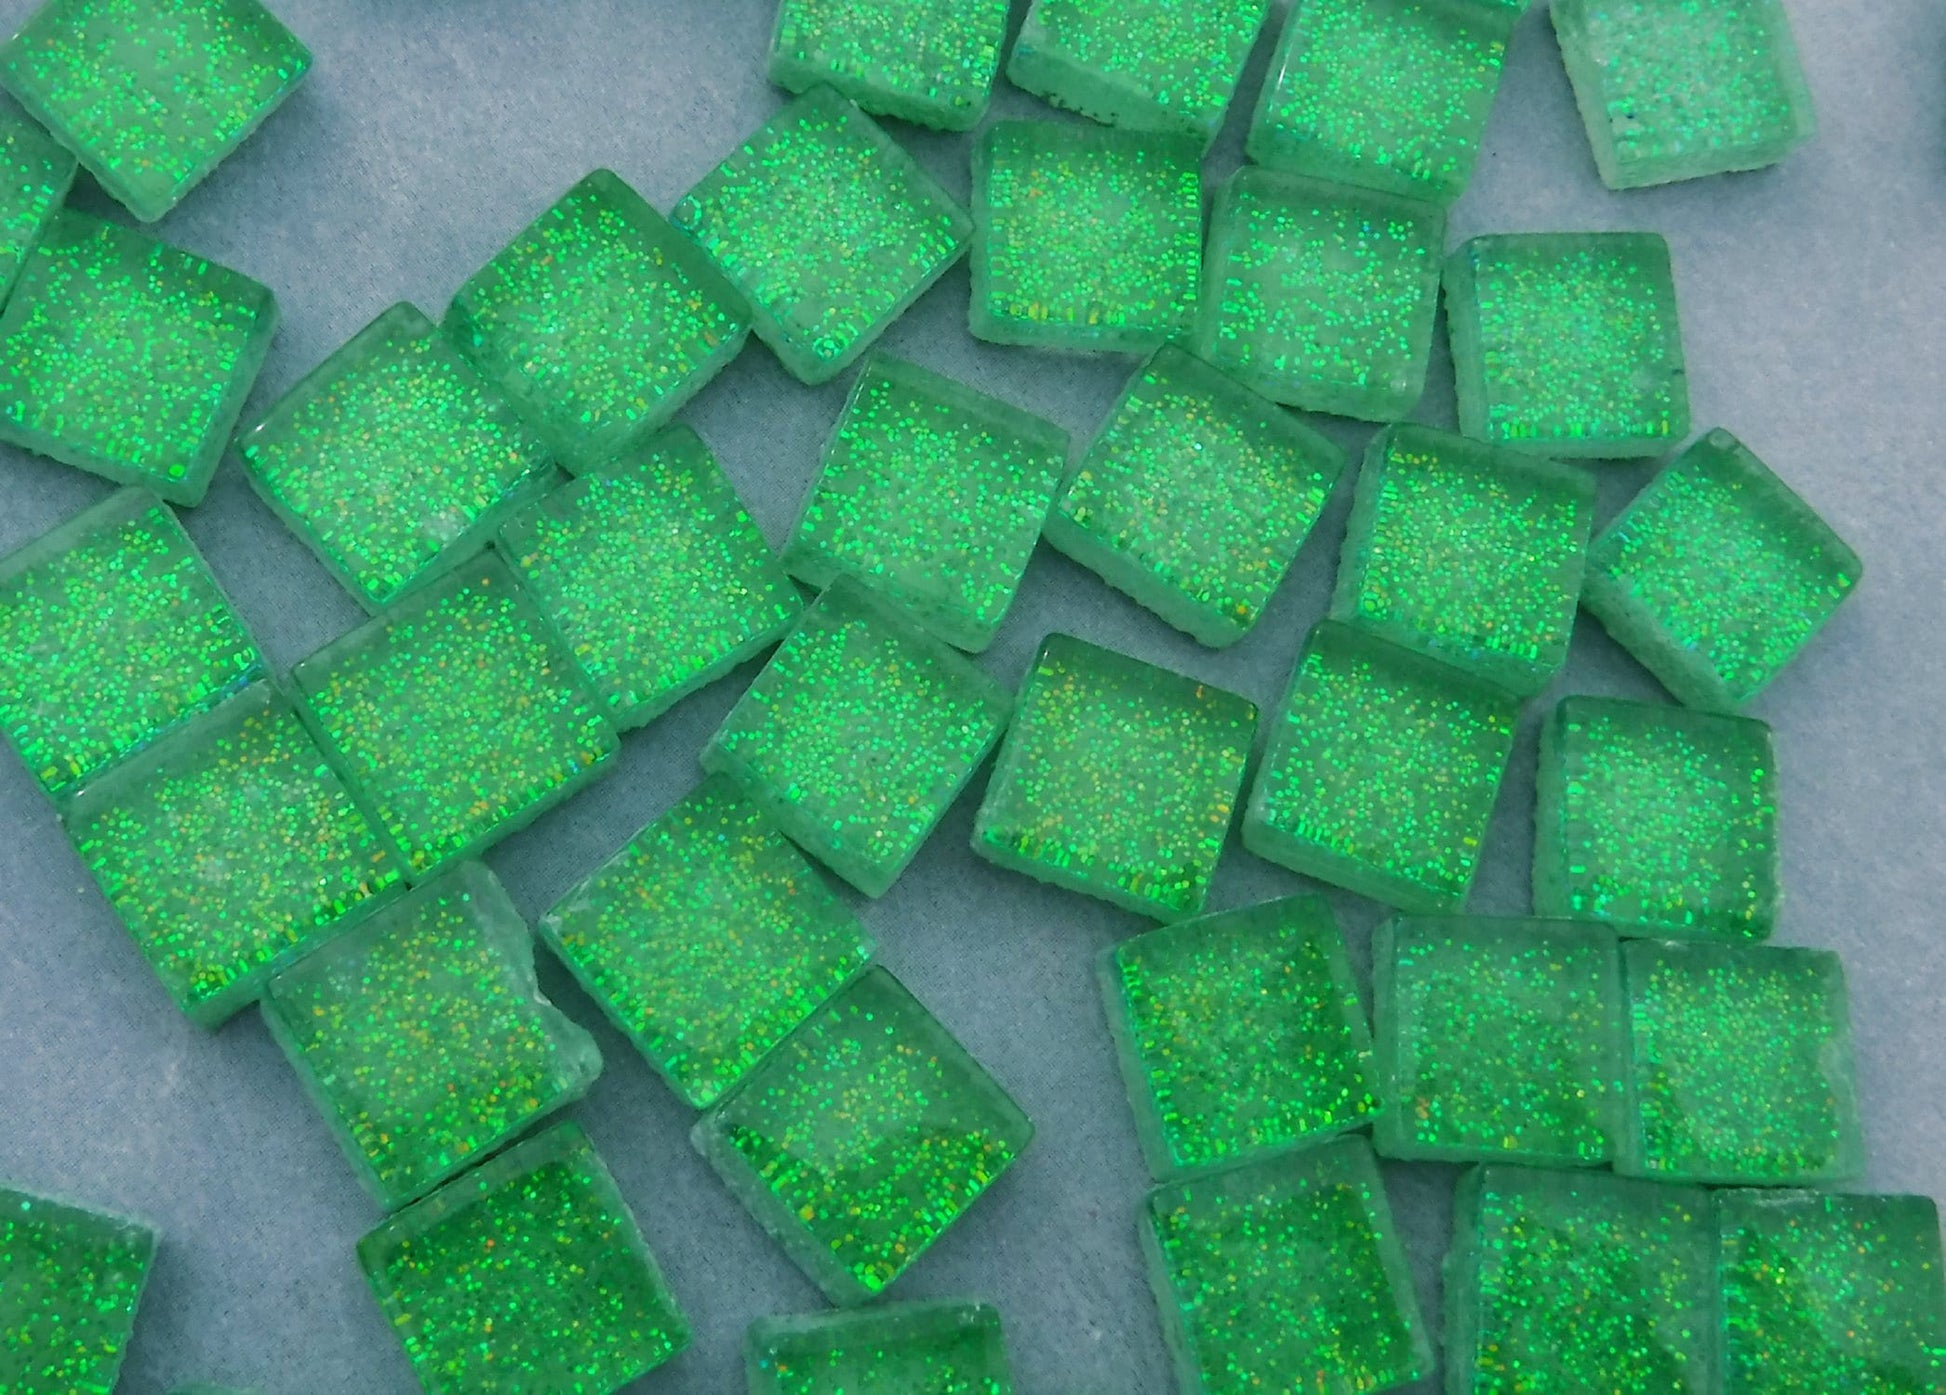 Bright Candy Green Glitter Tiles - 1 cm - 100g - Over 100 Metallic Glass Tiles